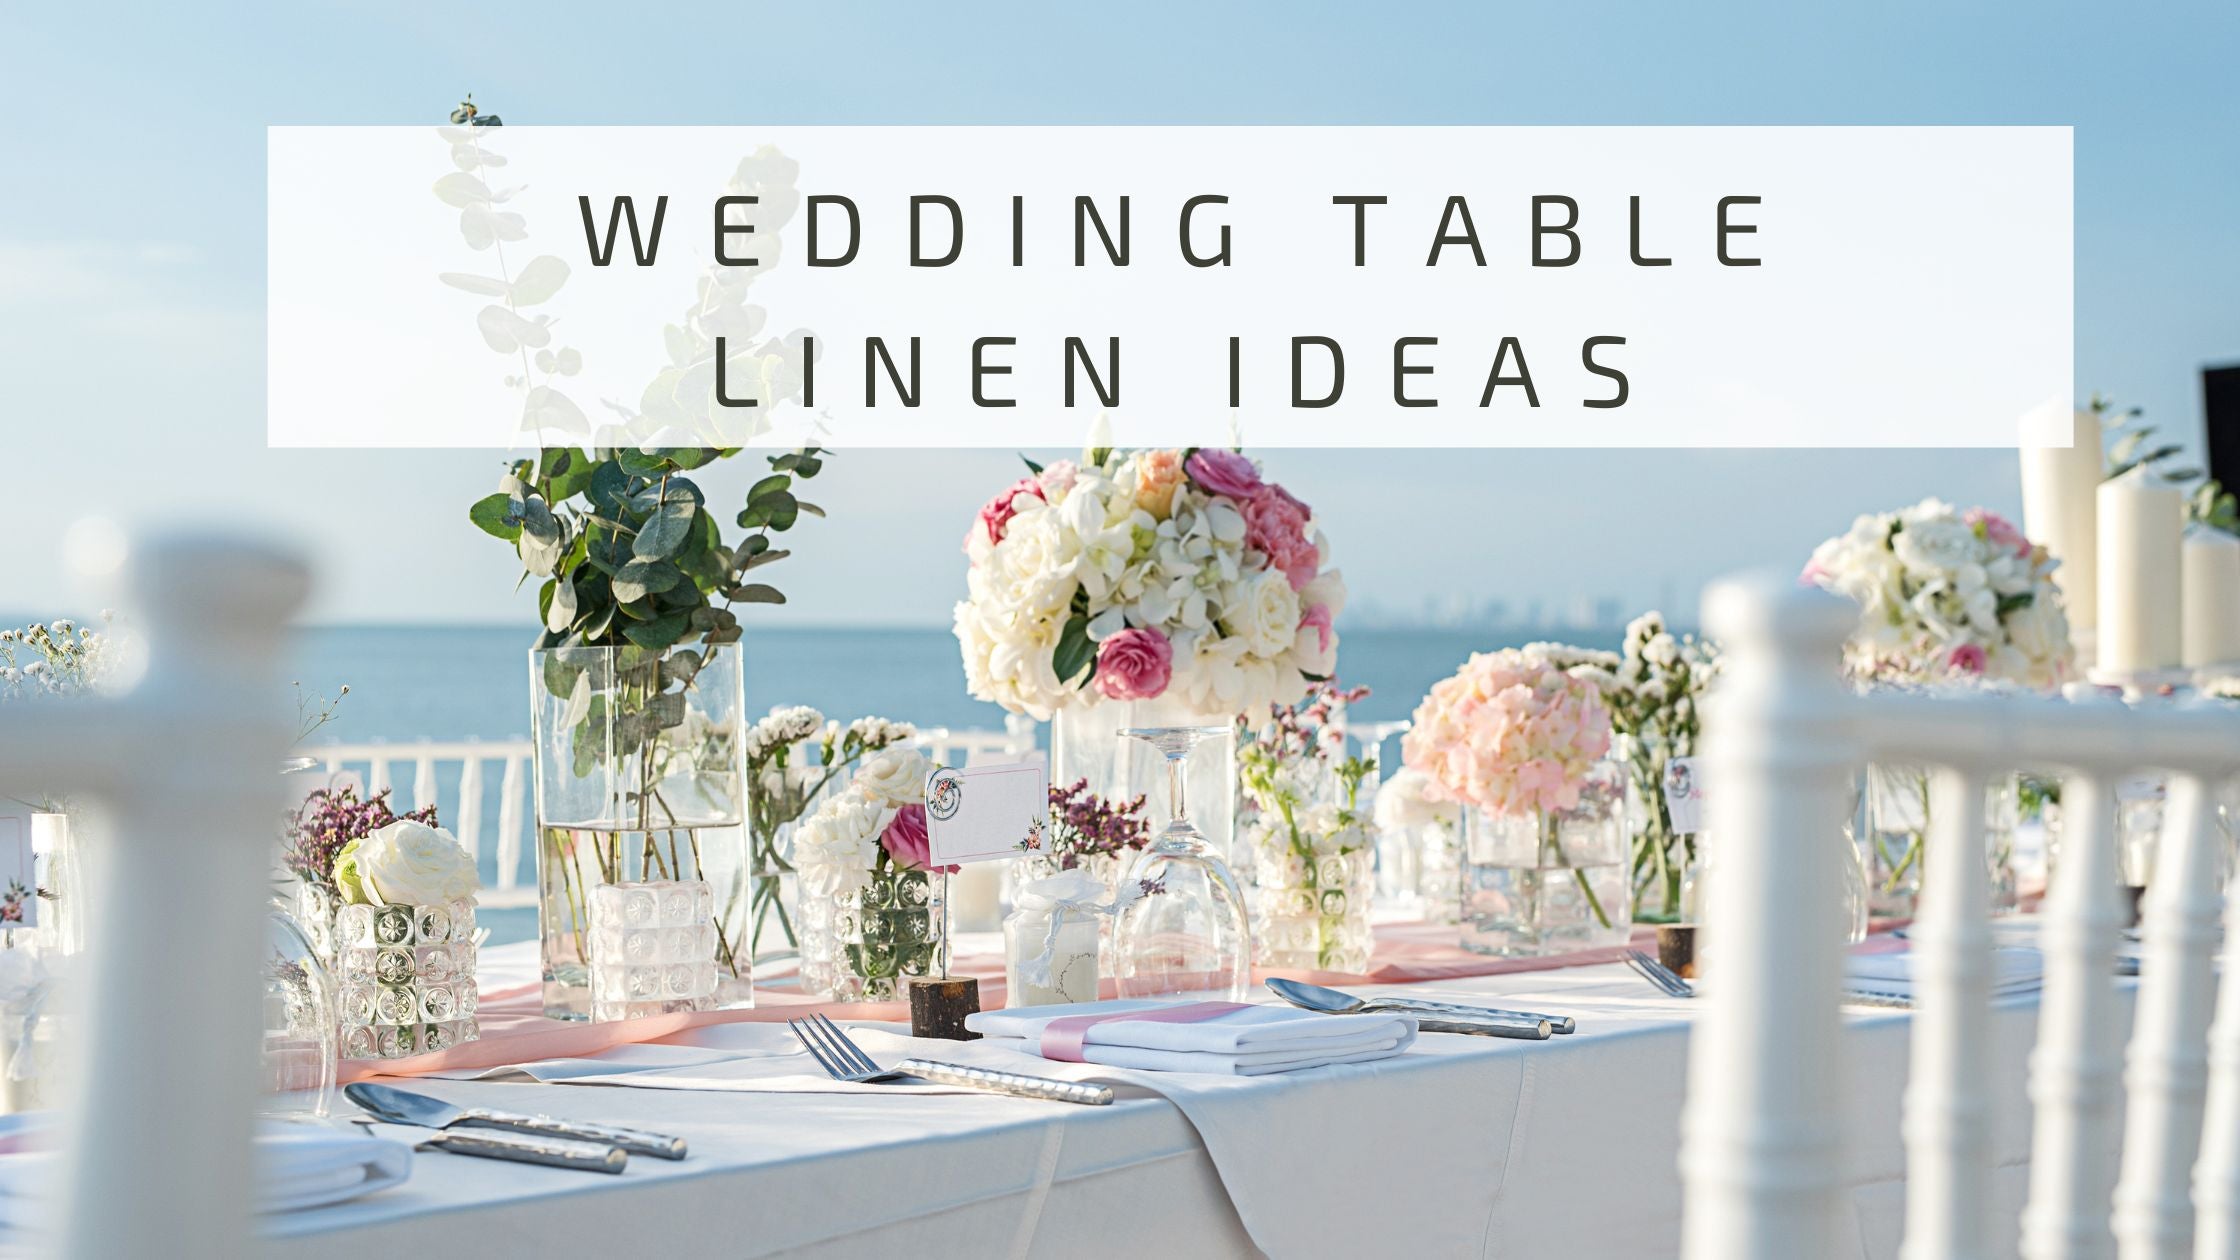 Five Table linen ideas for wedding